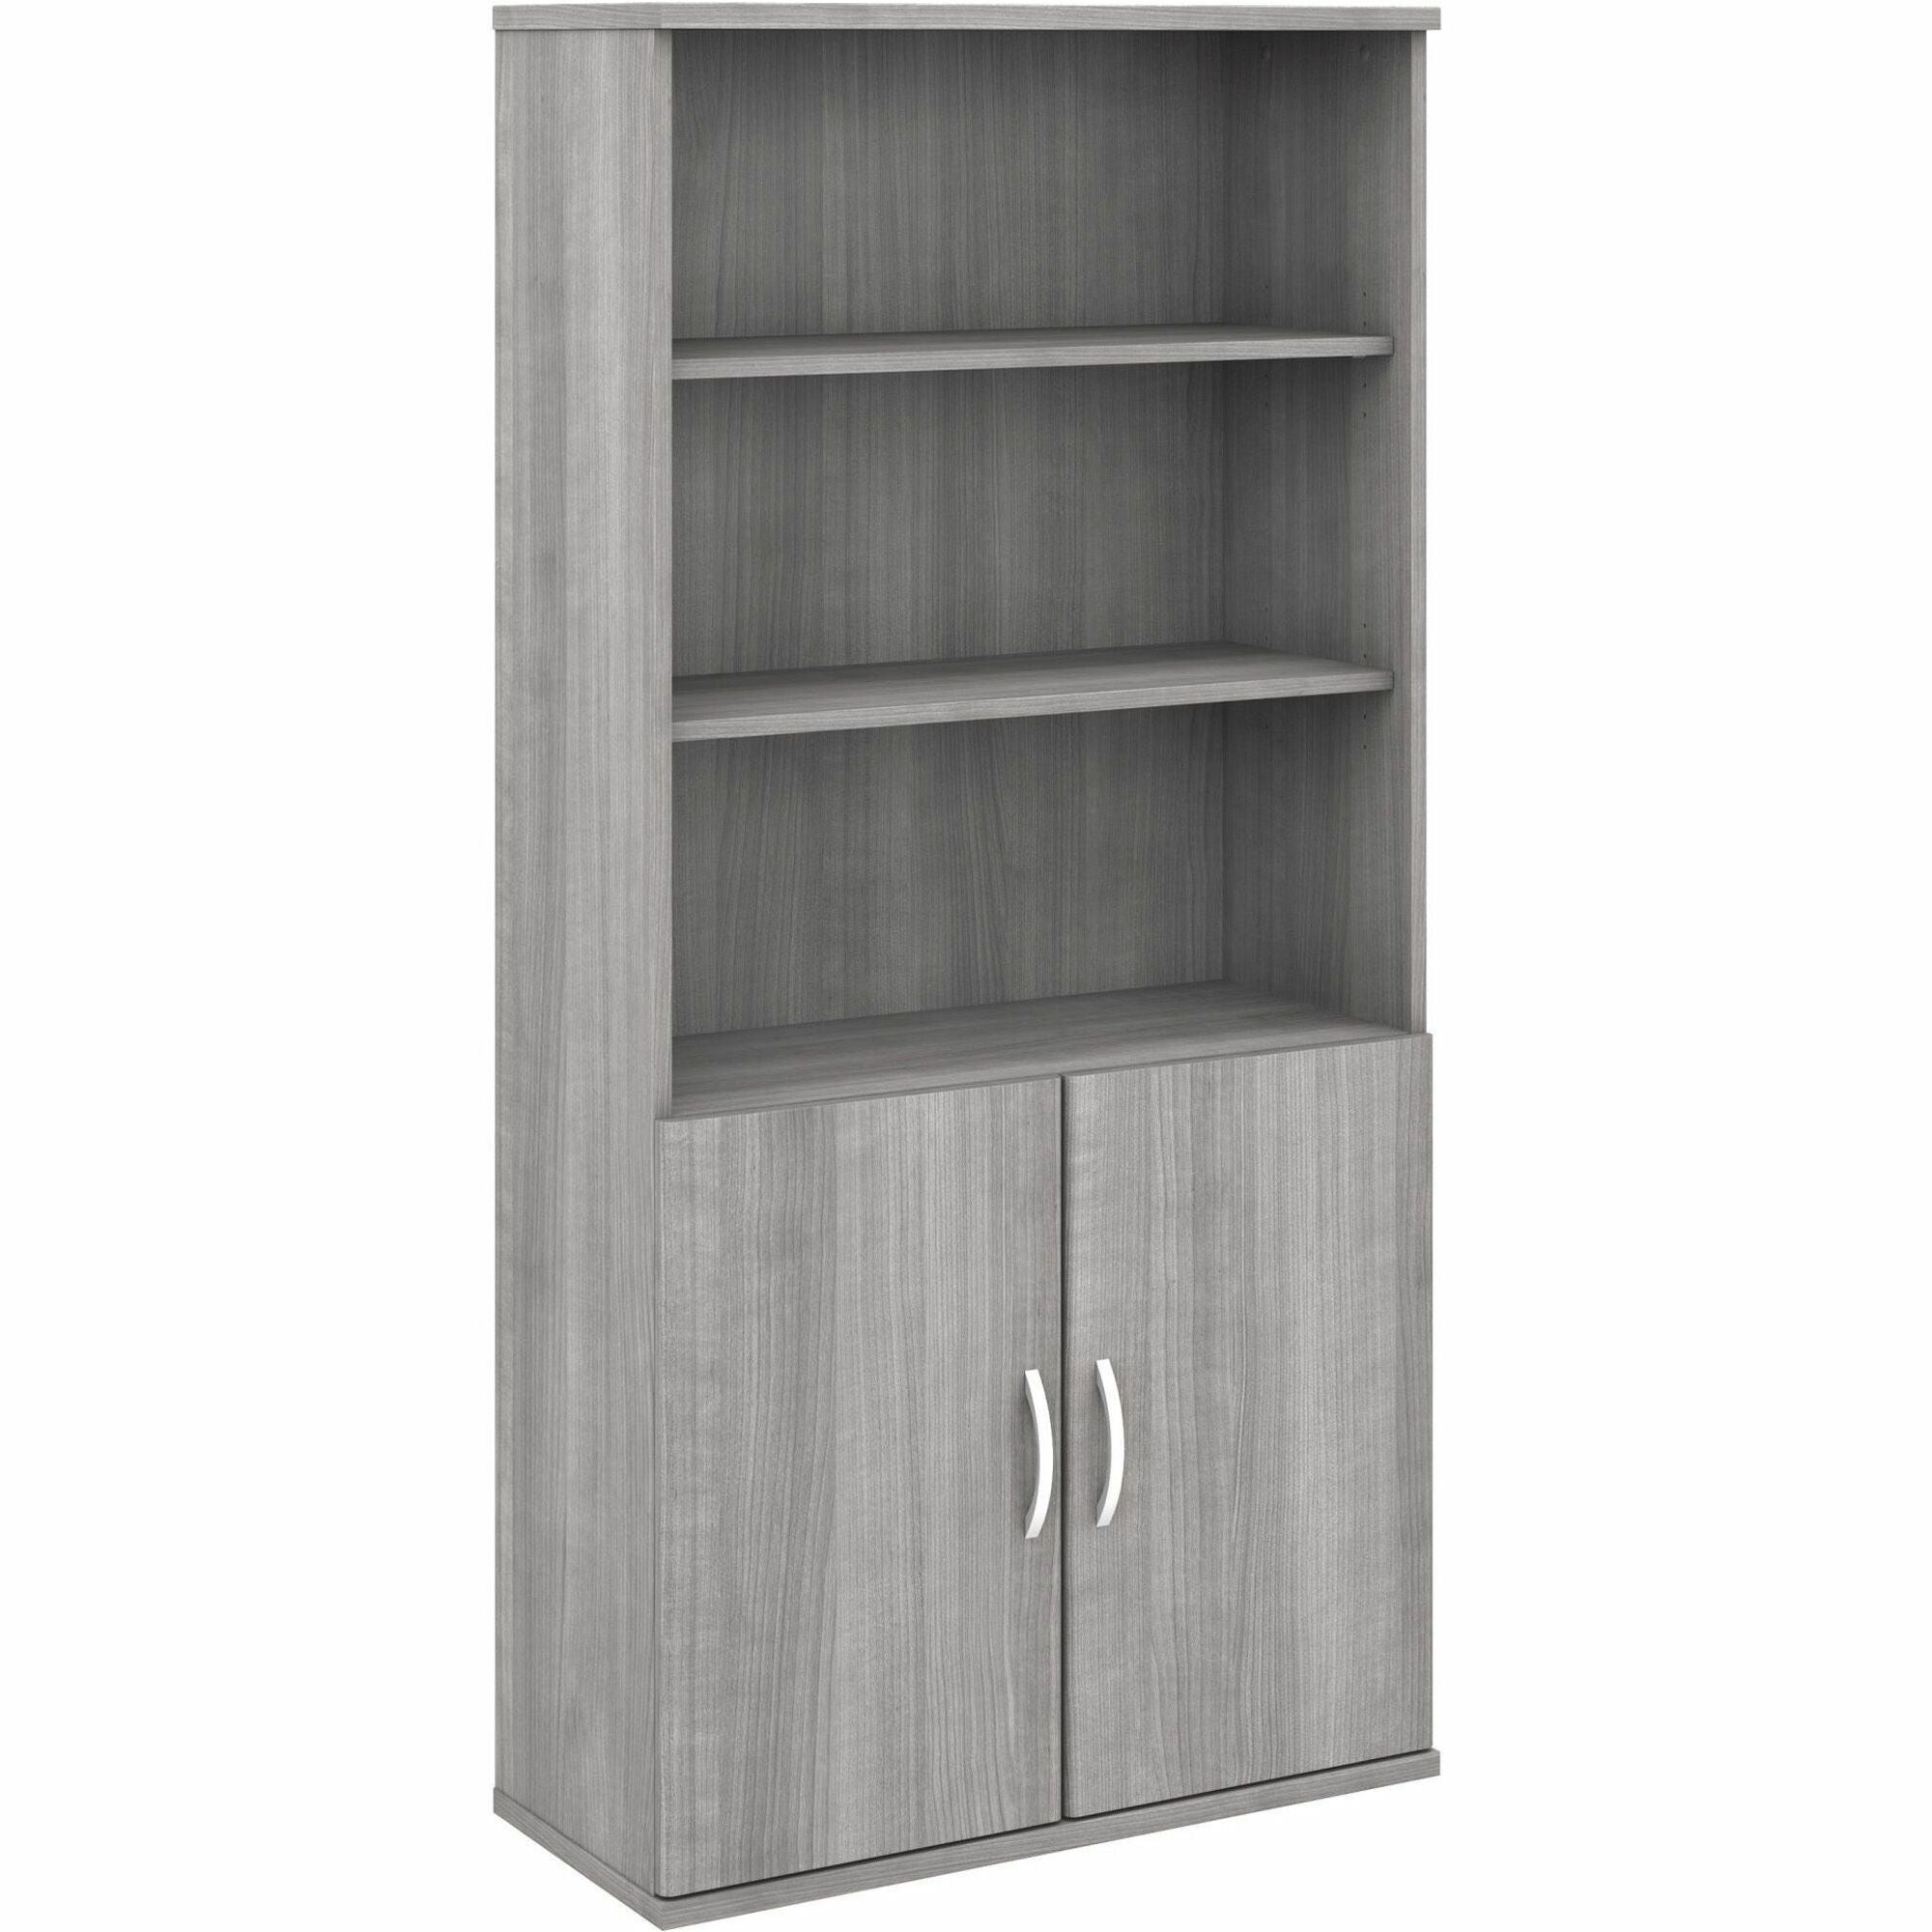 Bush Business Furniture Studio C 5 Shelf Bookcase with Doors - 36"72" Bookcase - 2 Door(s) - 5 Shelve(s) - 3 Adjustable Shelf(ves) - Finish: Platinum Gray, Thermofused Laminate (TFL) - 1